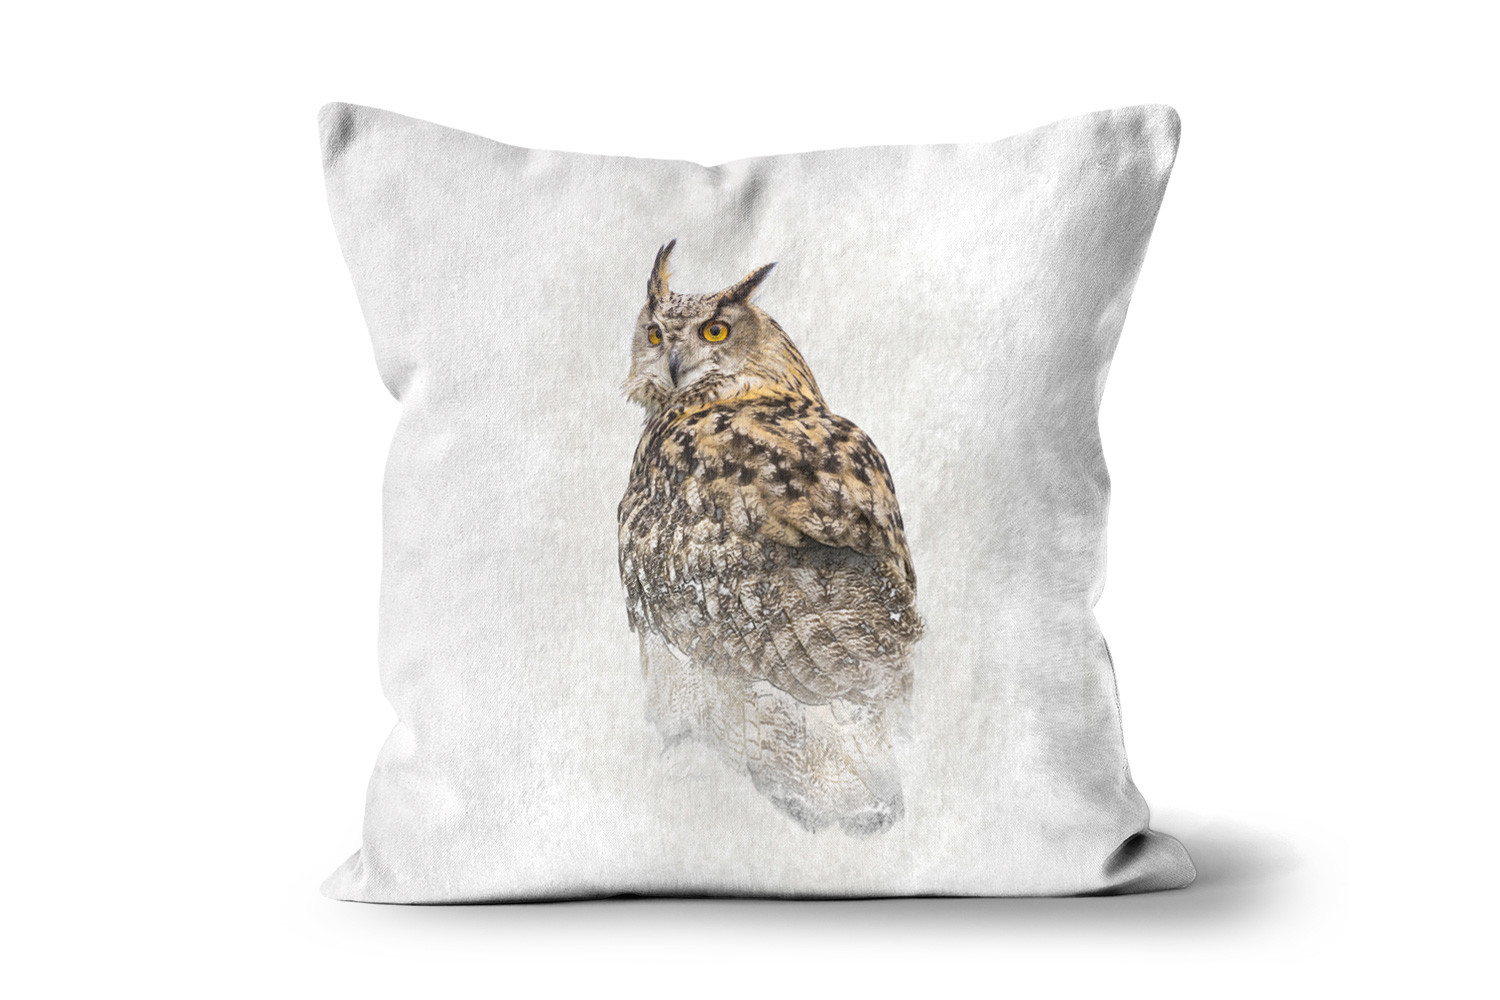 Turkmenian Eagle Owl 18in x 18in Square Throw Cushion